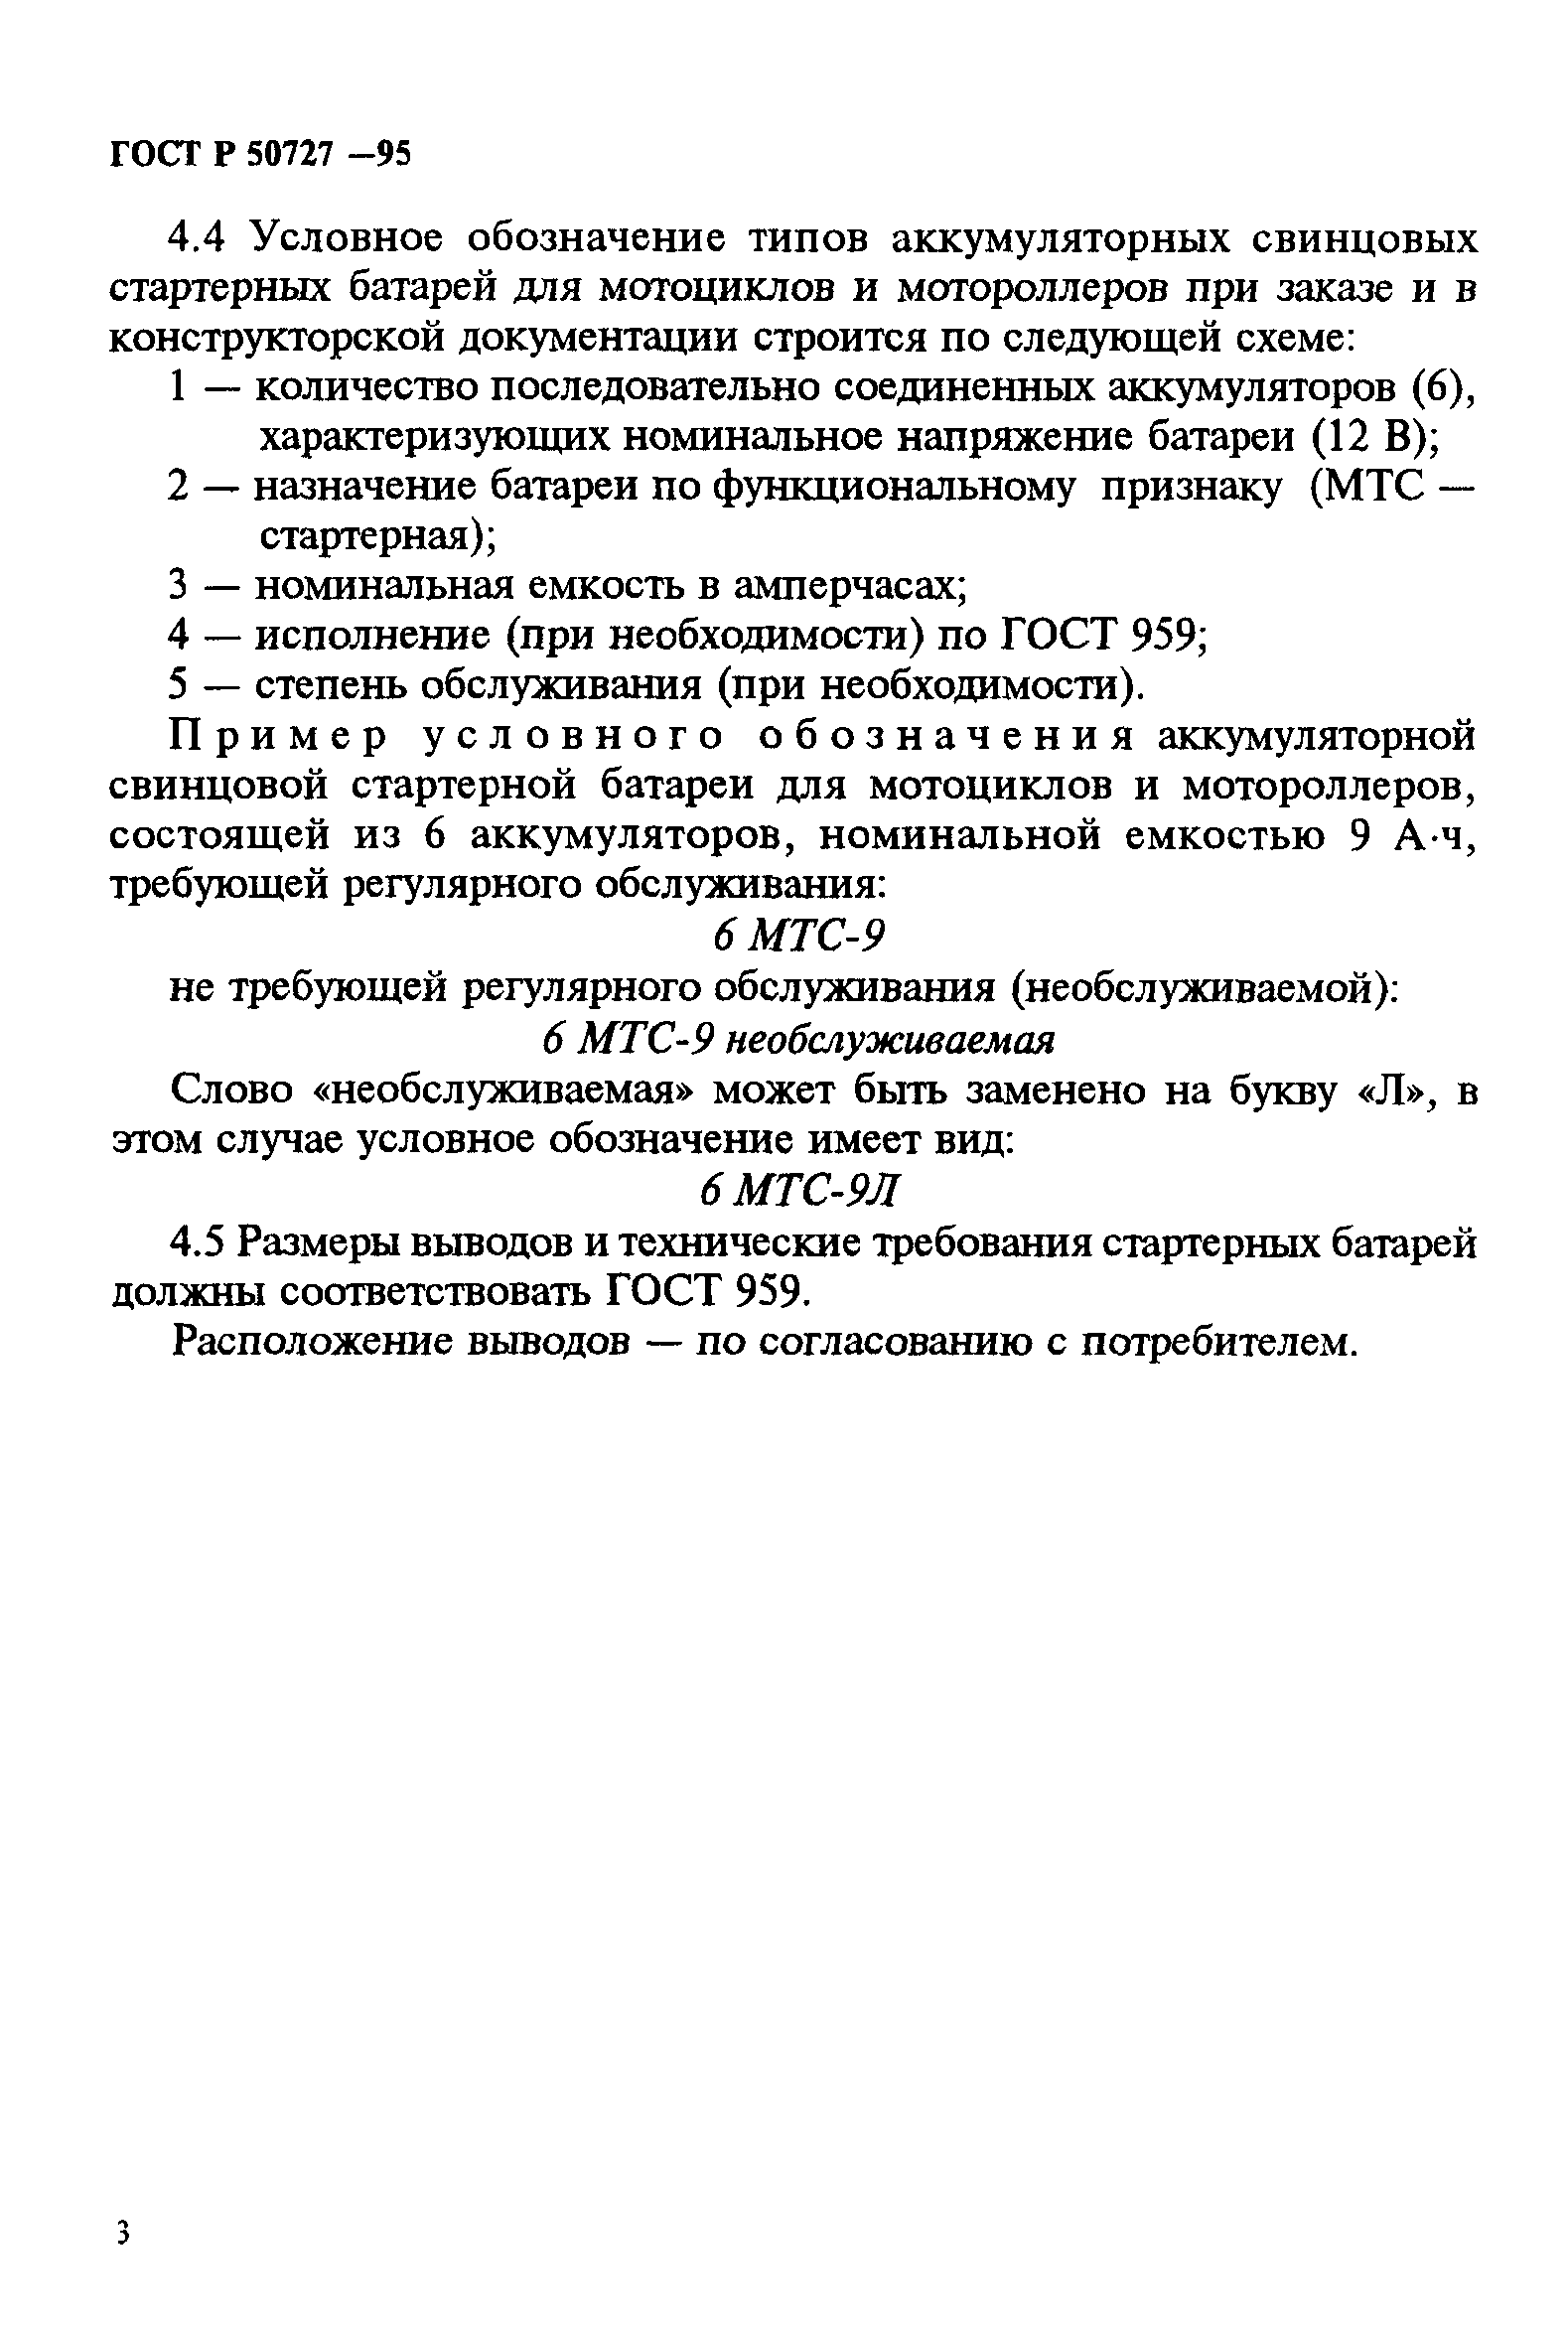 ГОСТ Р 50727-95